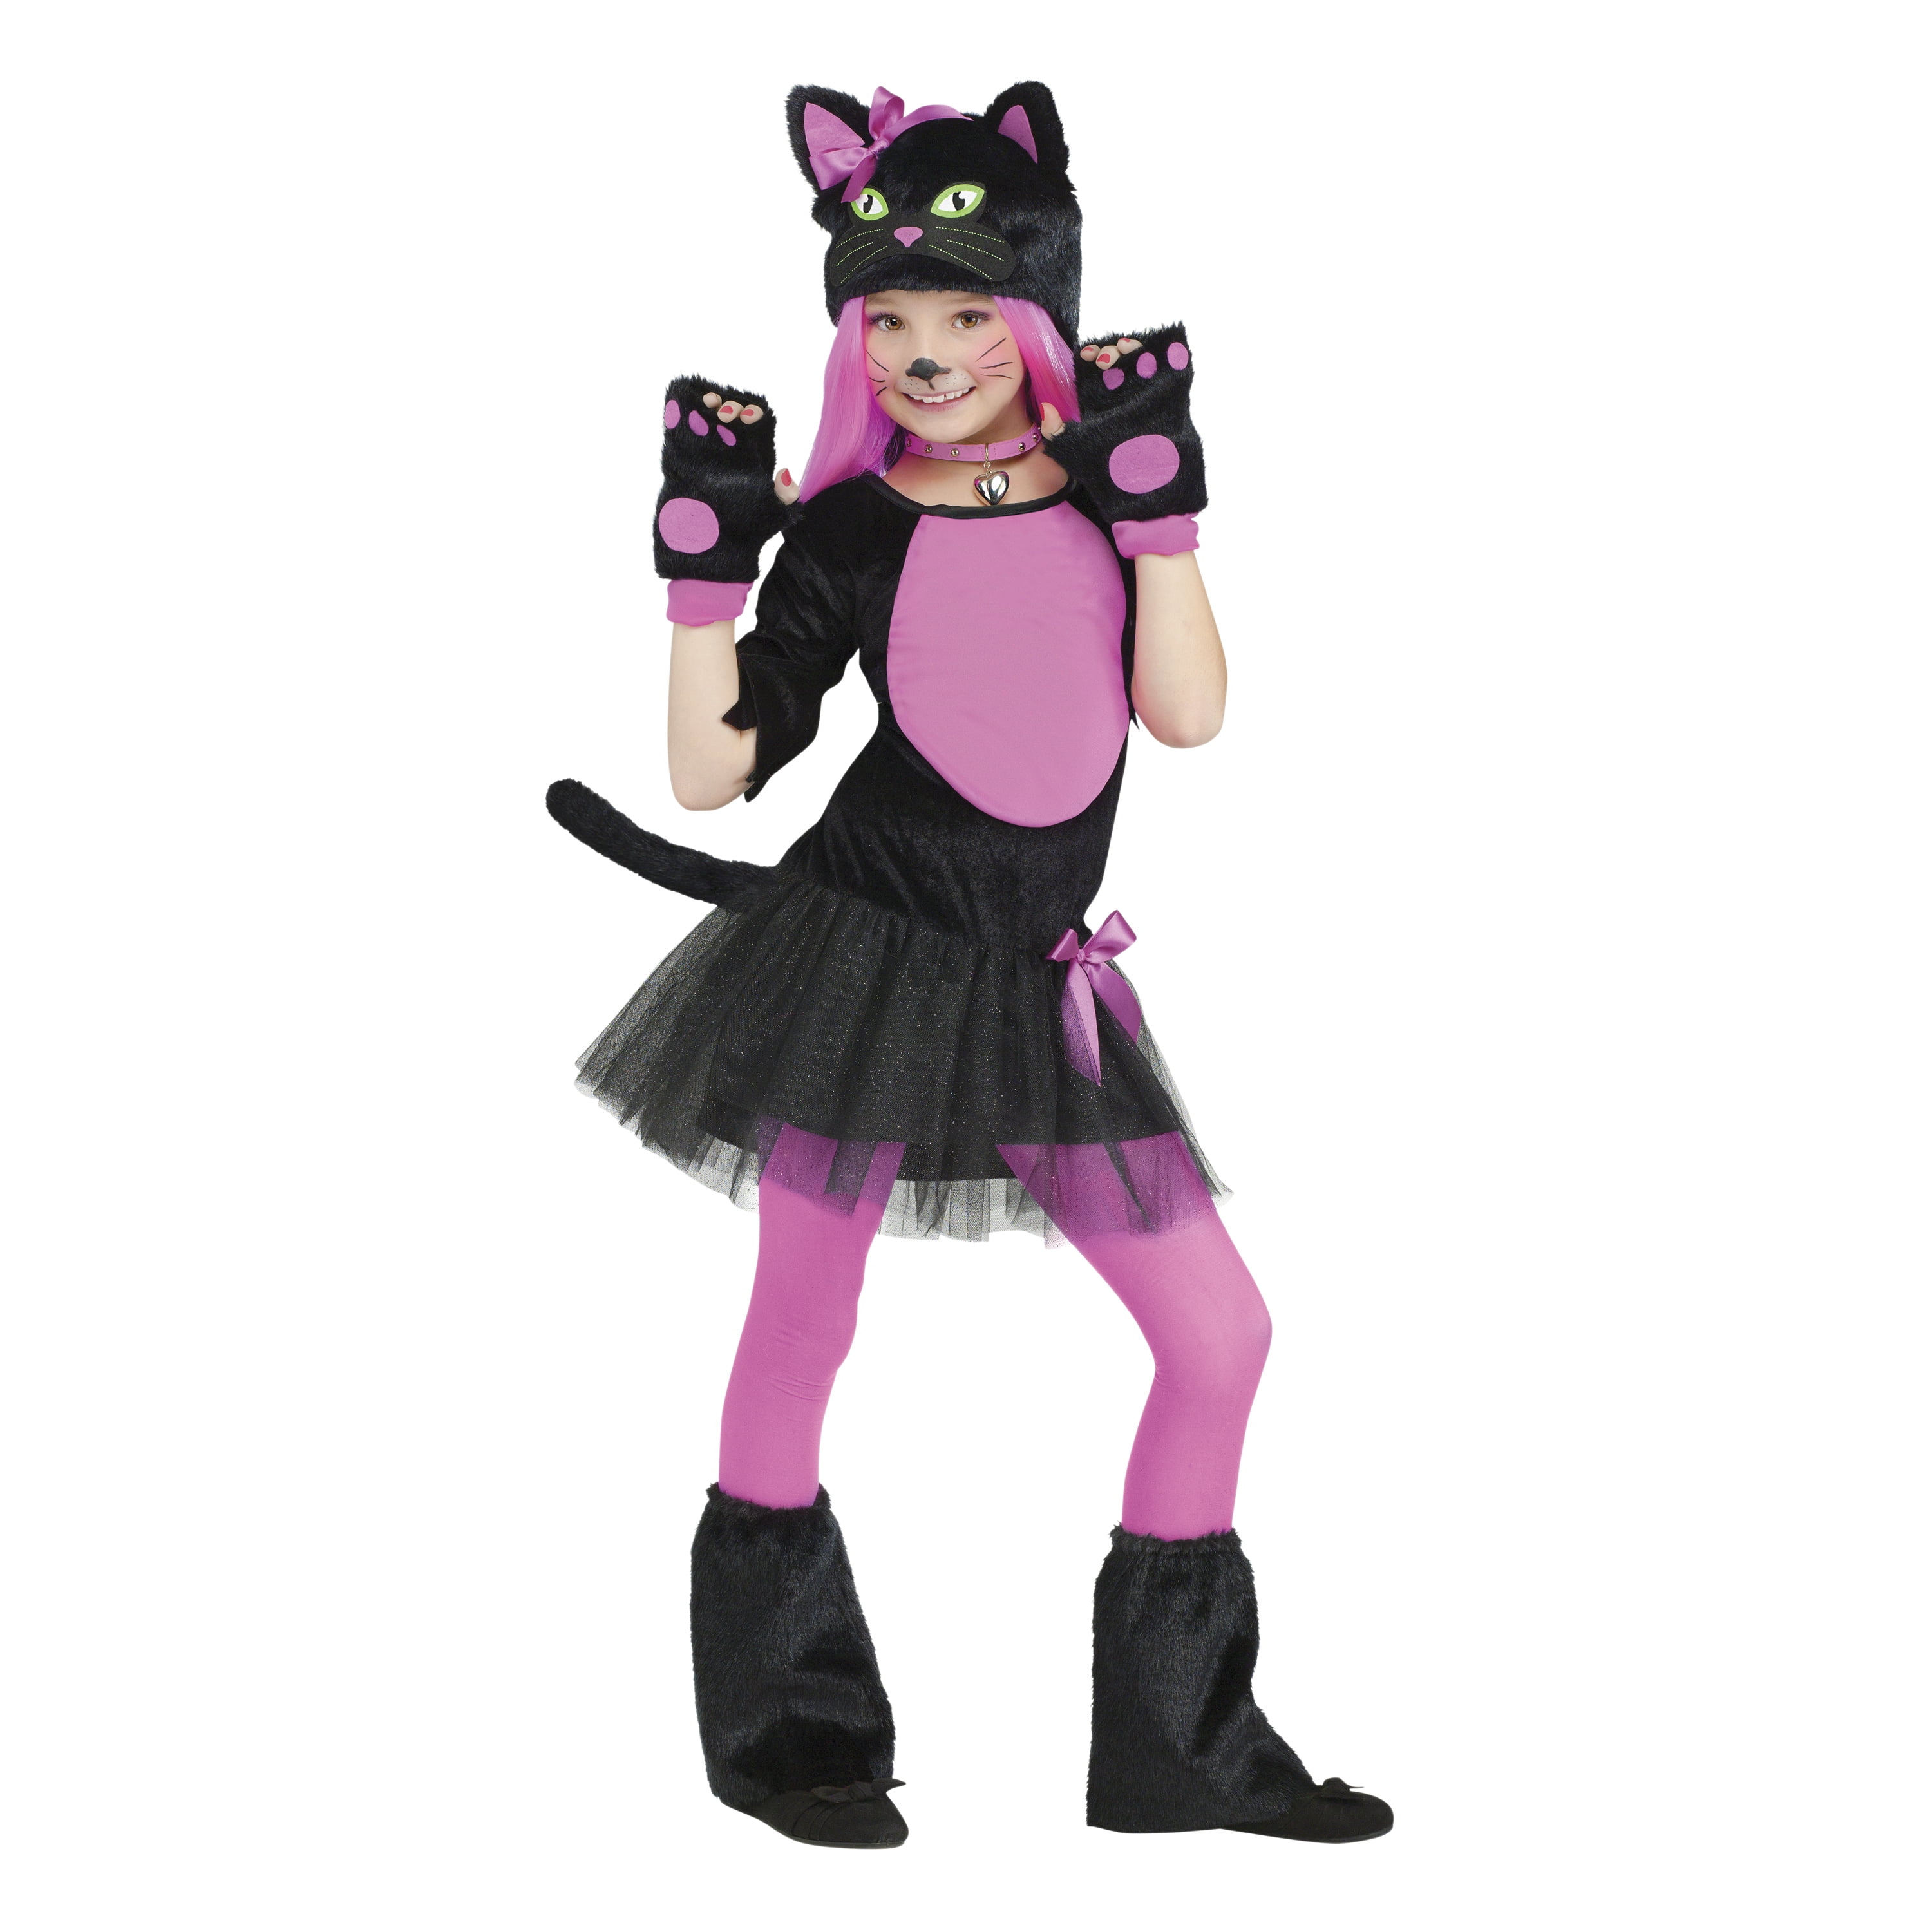 Judy Jetson Teen Halloween Costume, Size: Teen Girls' - One Size 